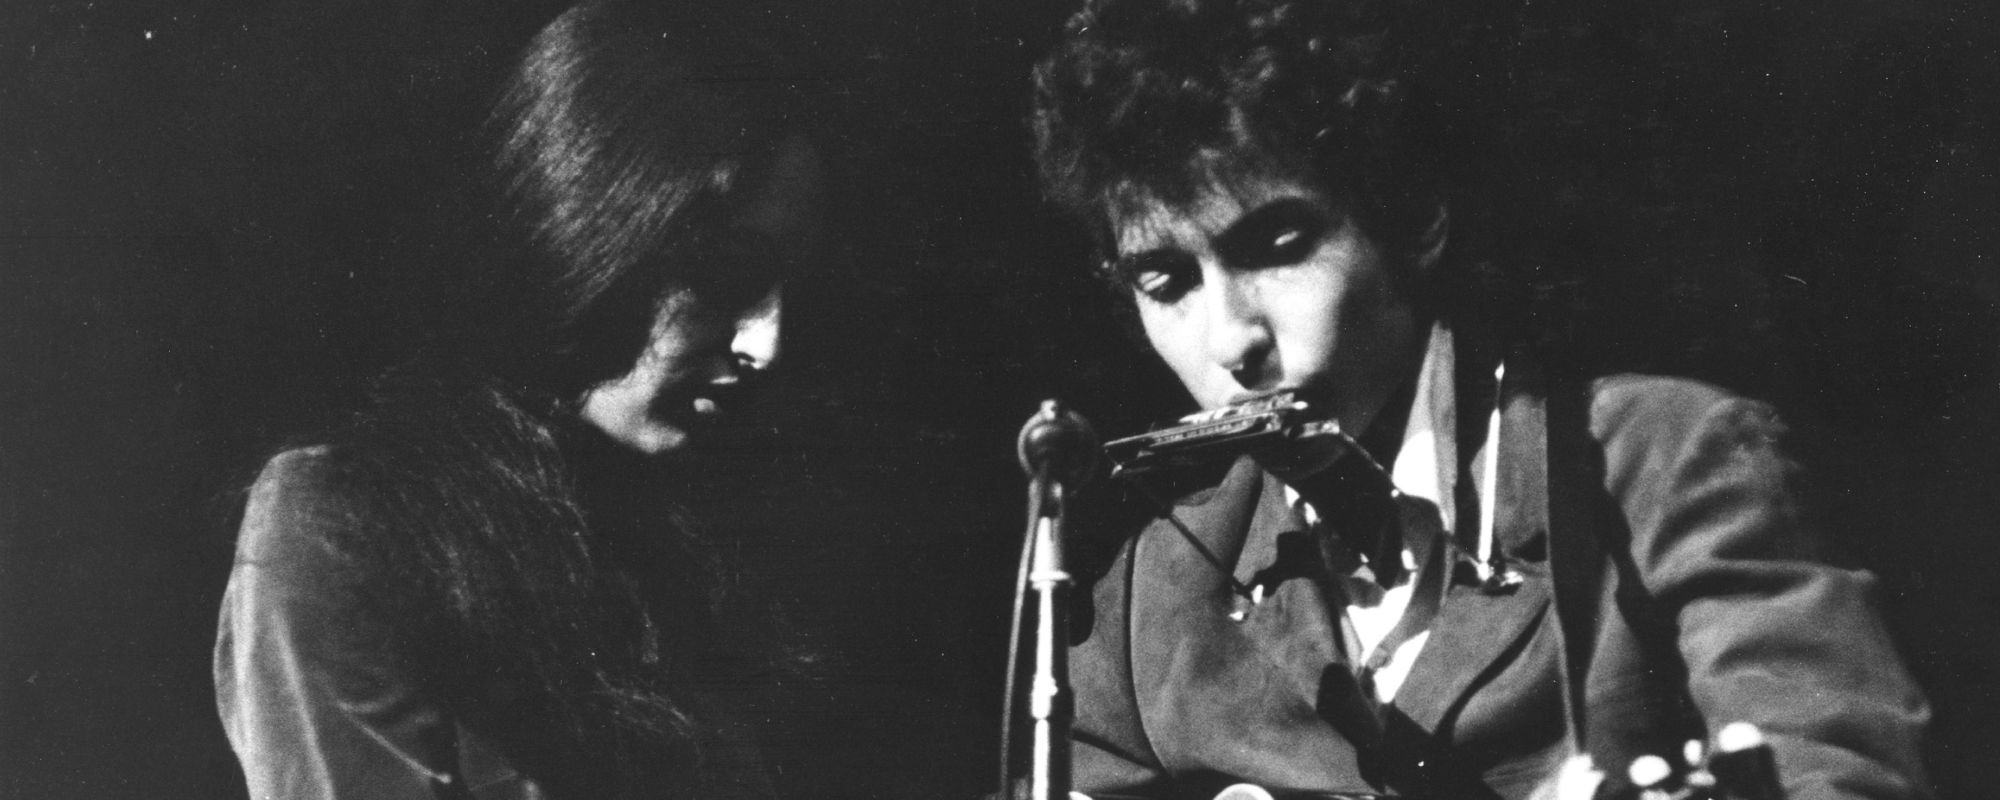 Joan Baez and Bob Dylan perform together